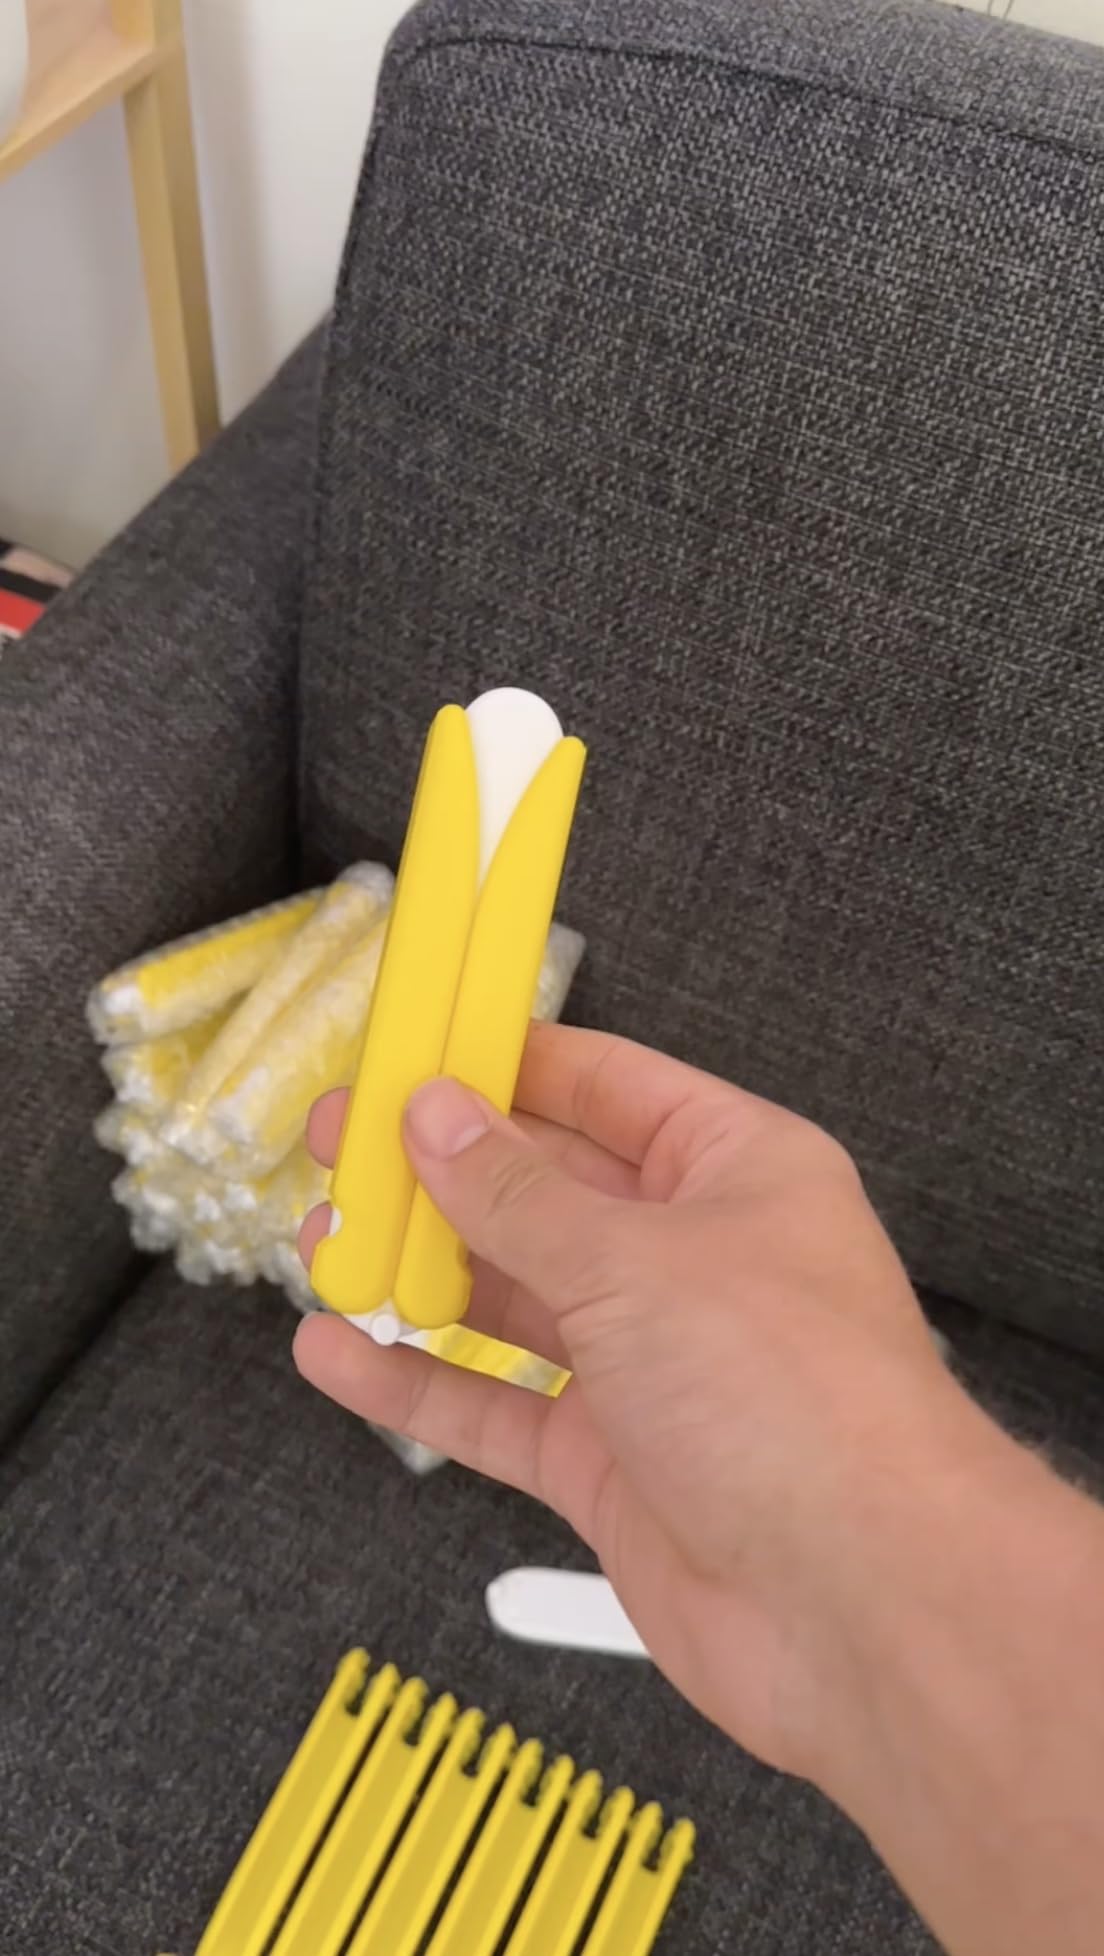 BananaSong - The Banana Balisong Switchblade Toy Knife from TikTok Viral Video - GoodBuy.ai